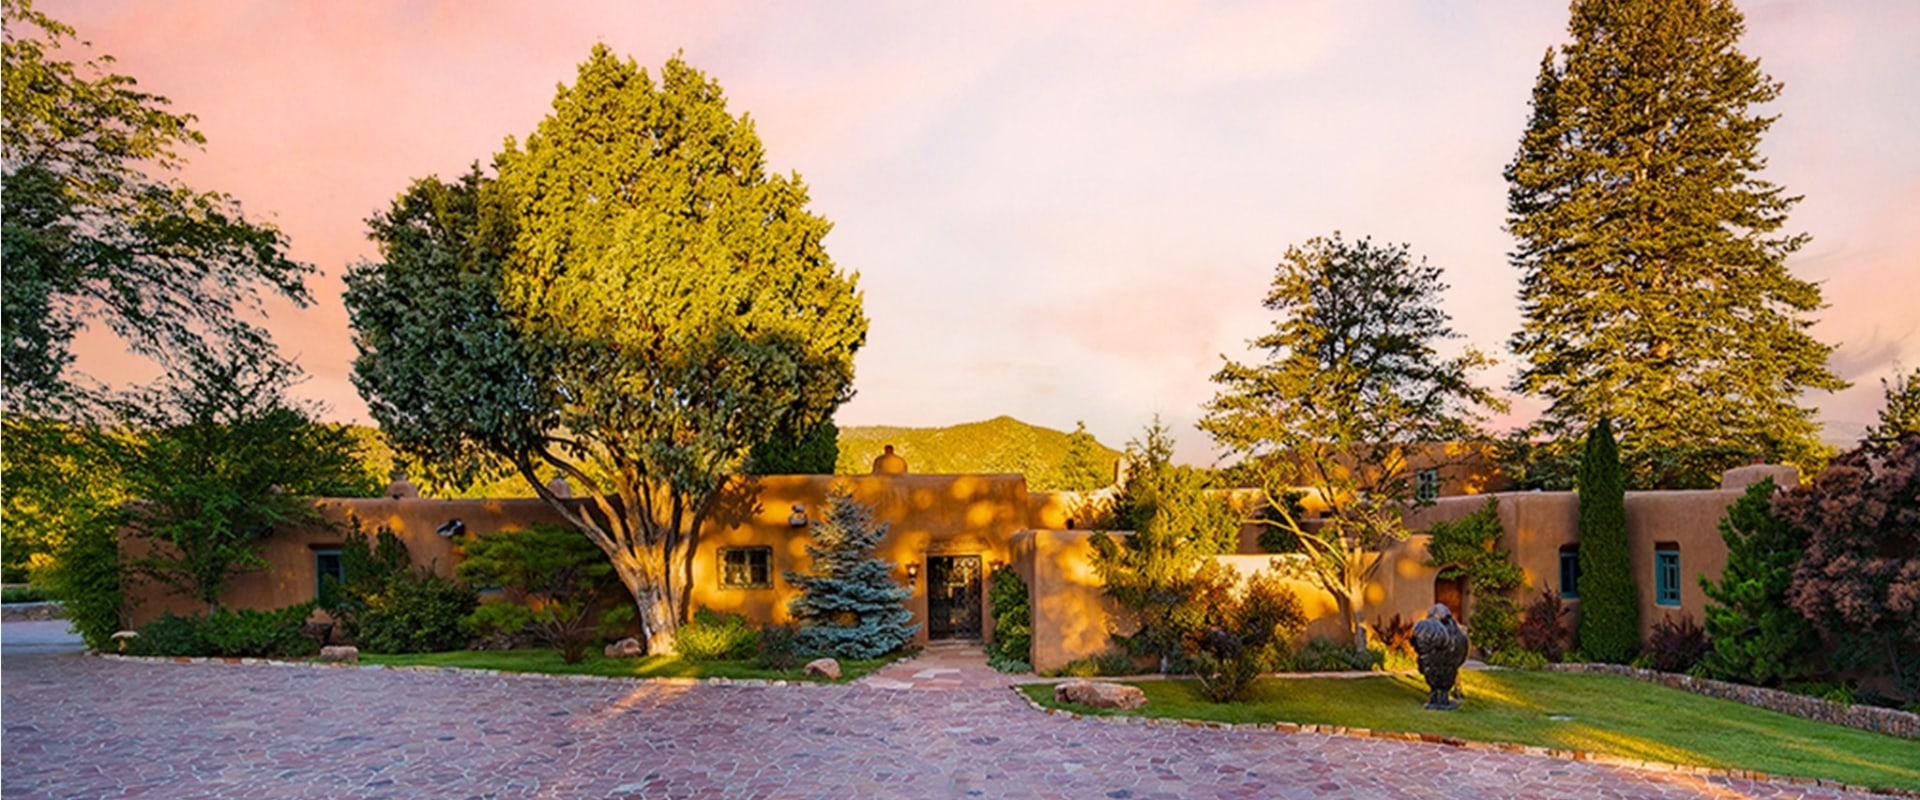 Santa Fe Dream Homes: Your Real Estate Destination